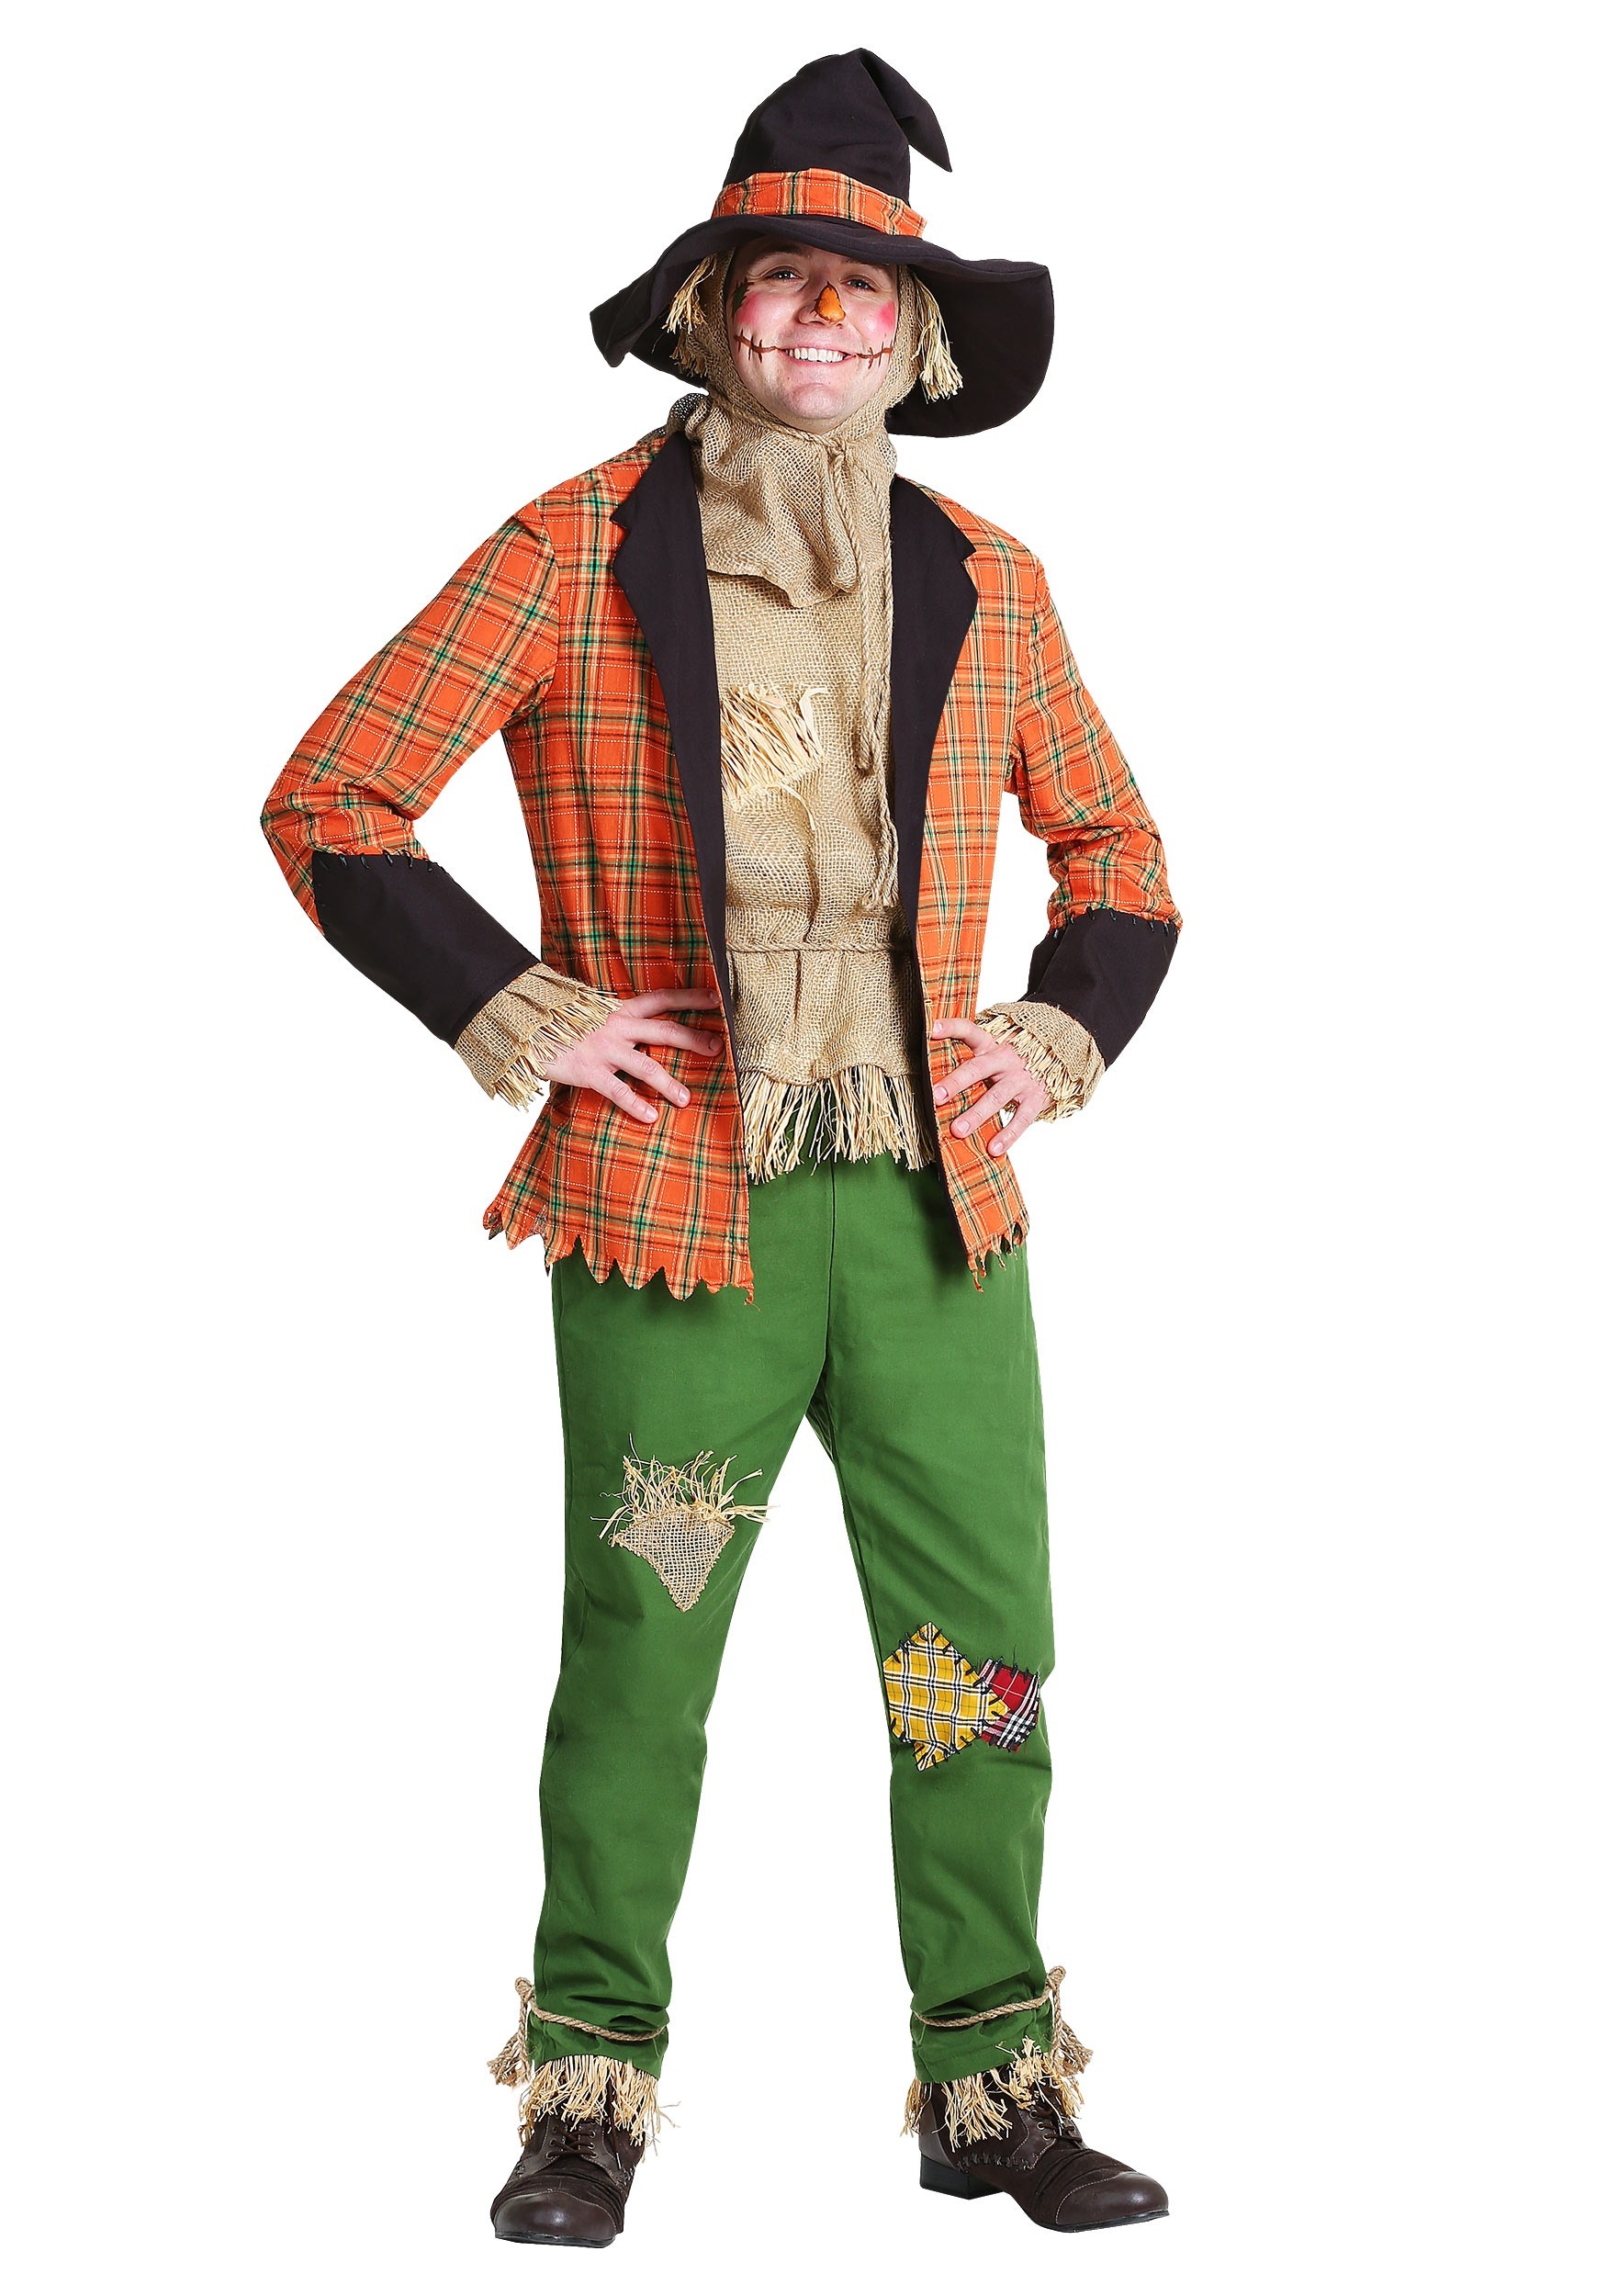 Photos - Fancy Dress FUN Costumes Scarecrow Costume for Men Green/Orange/Beige FUN0245A